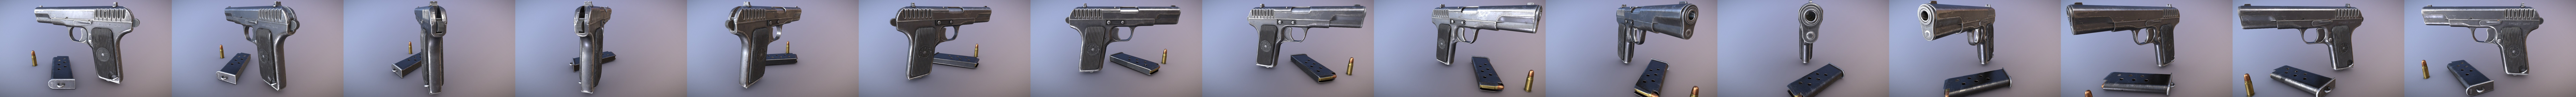 Tt 33 Pistol Buy Royalty Free 3d Model By Luchador Luchador90 424a27b Sketchfab Store - tt 33 pistol roblox